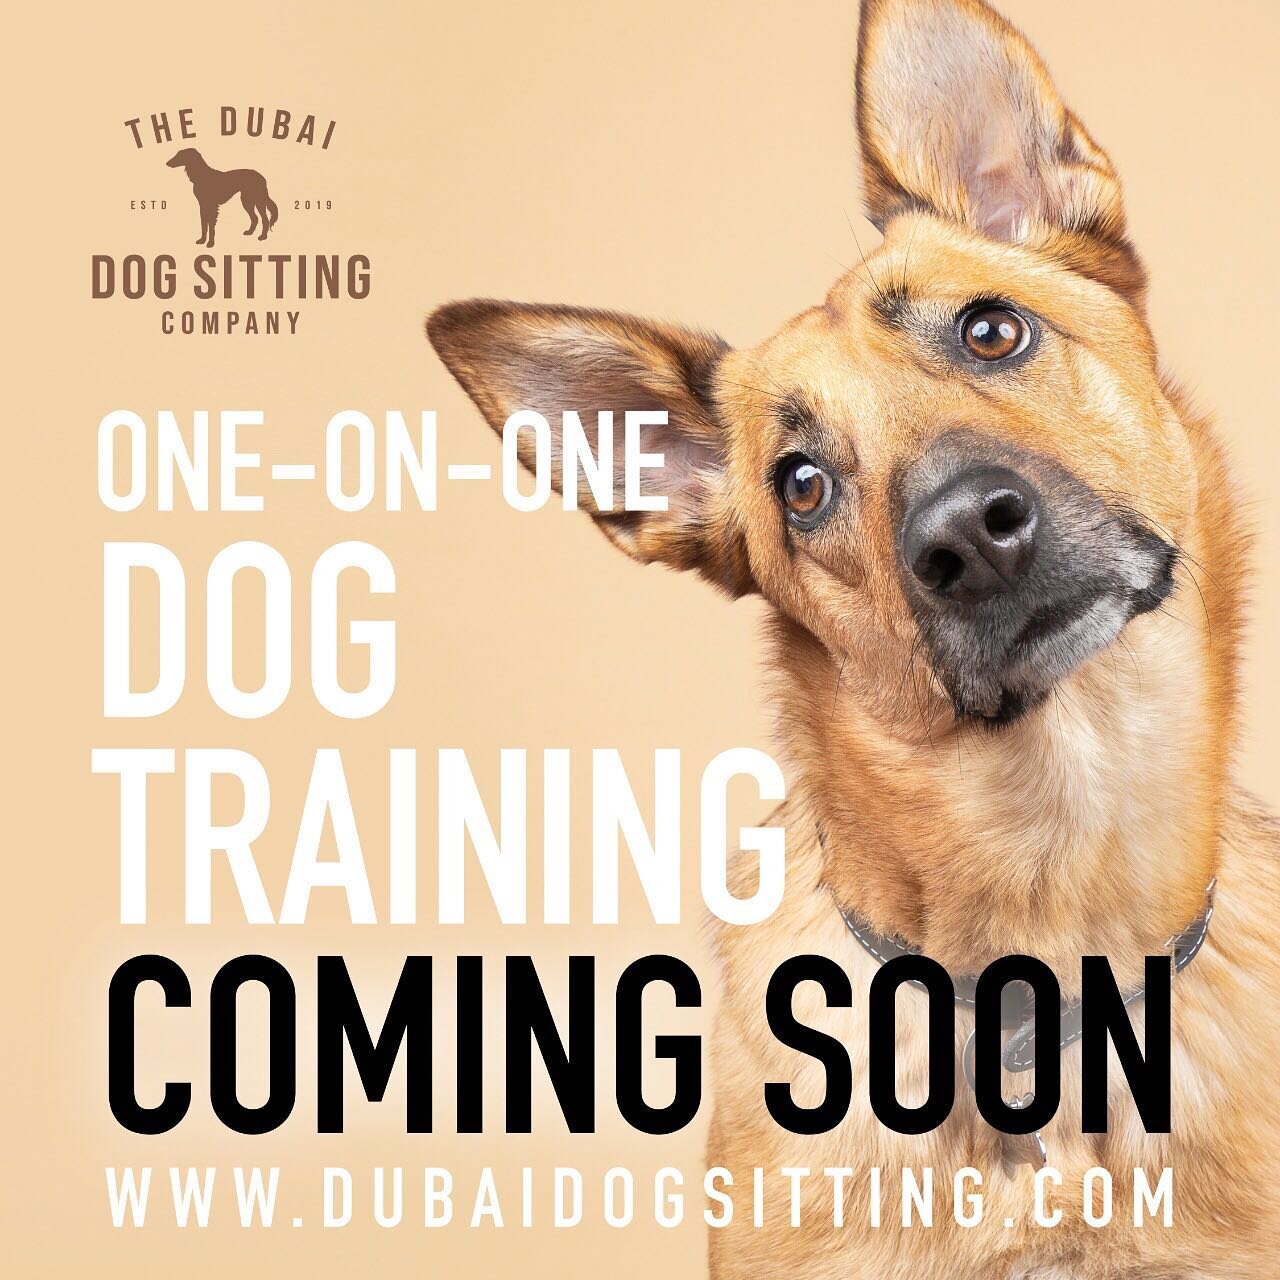 COMING SOON! Get those doggos under control with our force-free training.🐕
@lou_1830 #dubaidogs #dubaidog #dogsindubai #dogtraining #puppytraining #dogbehavior #clickertrained #gooddog